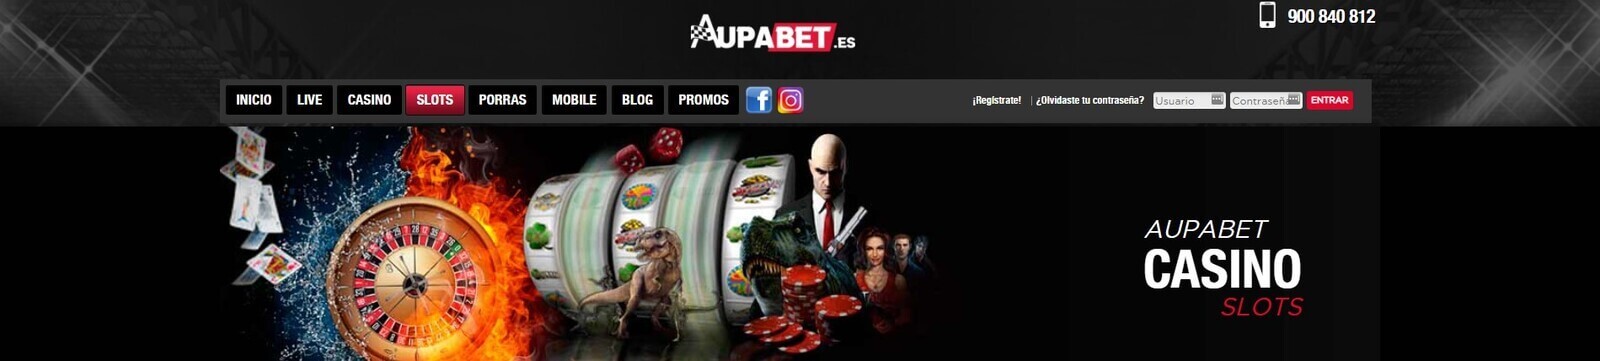 Página web de Aupabet